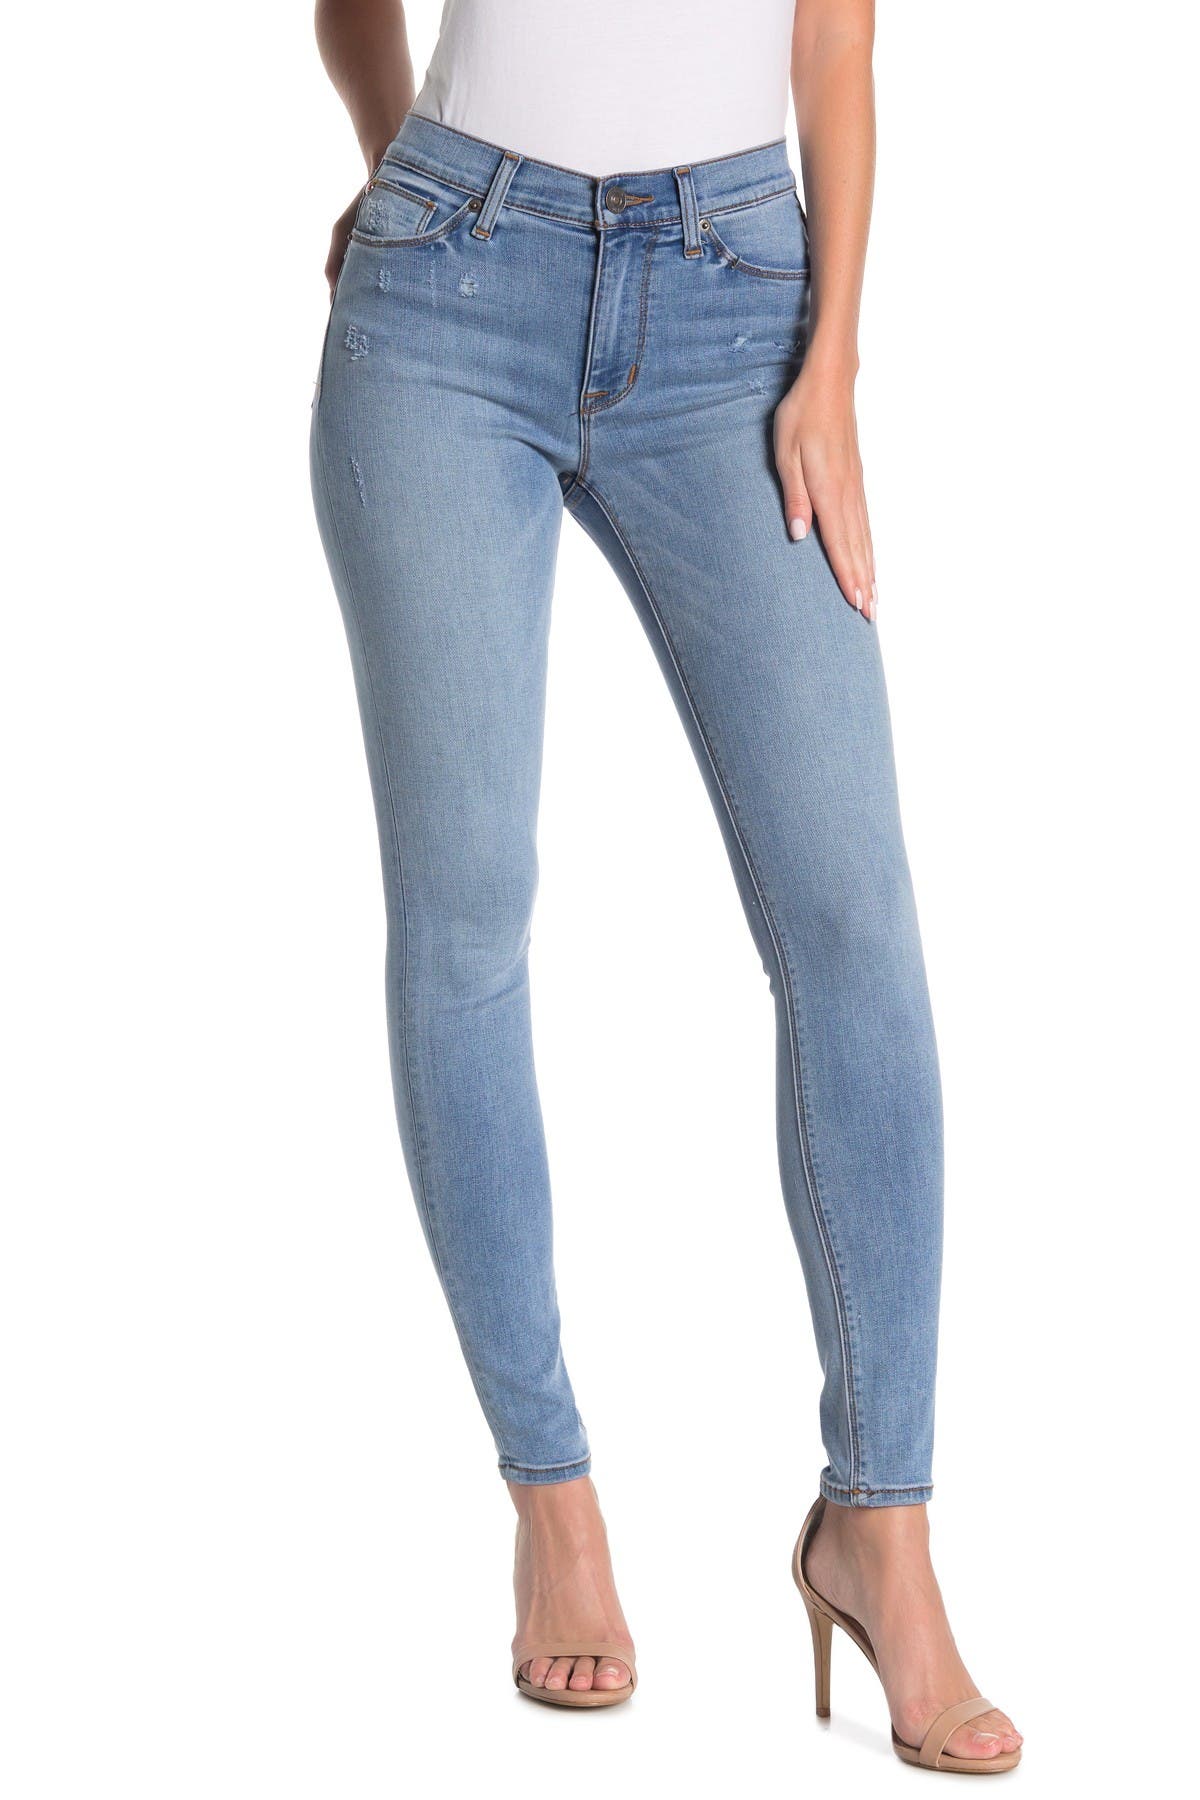 HUDSON Jeans | Blair Super Skinny Jeans | Nordstrom Rack